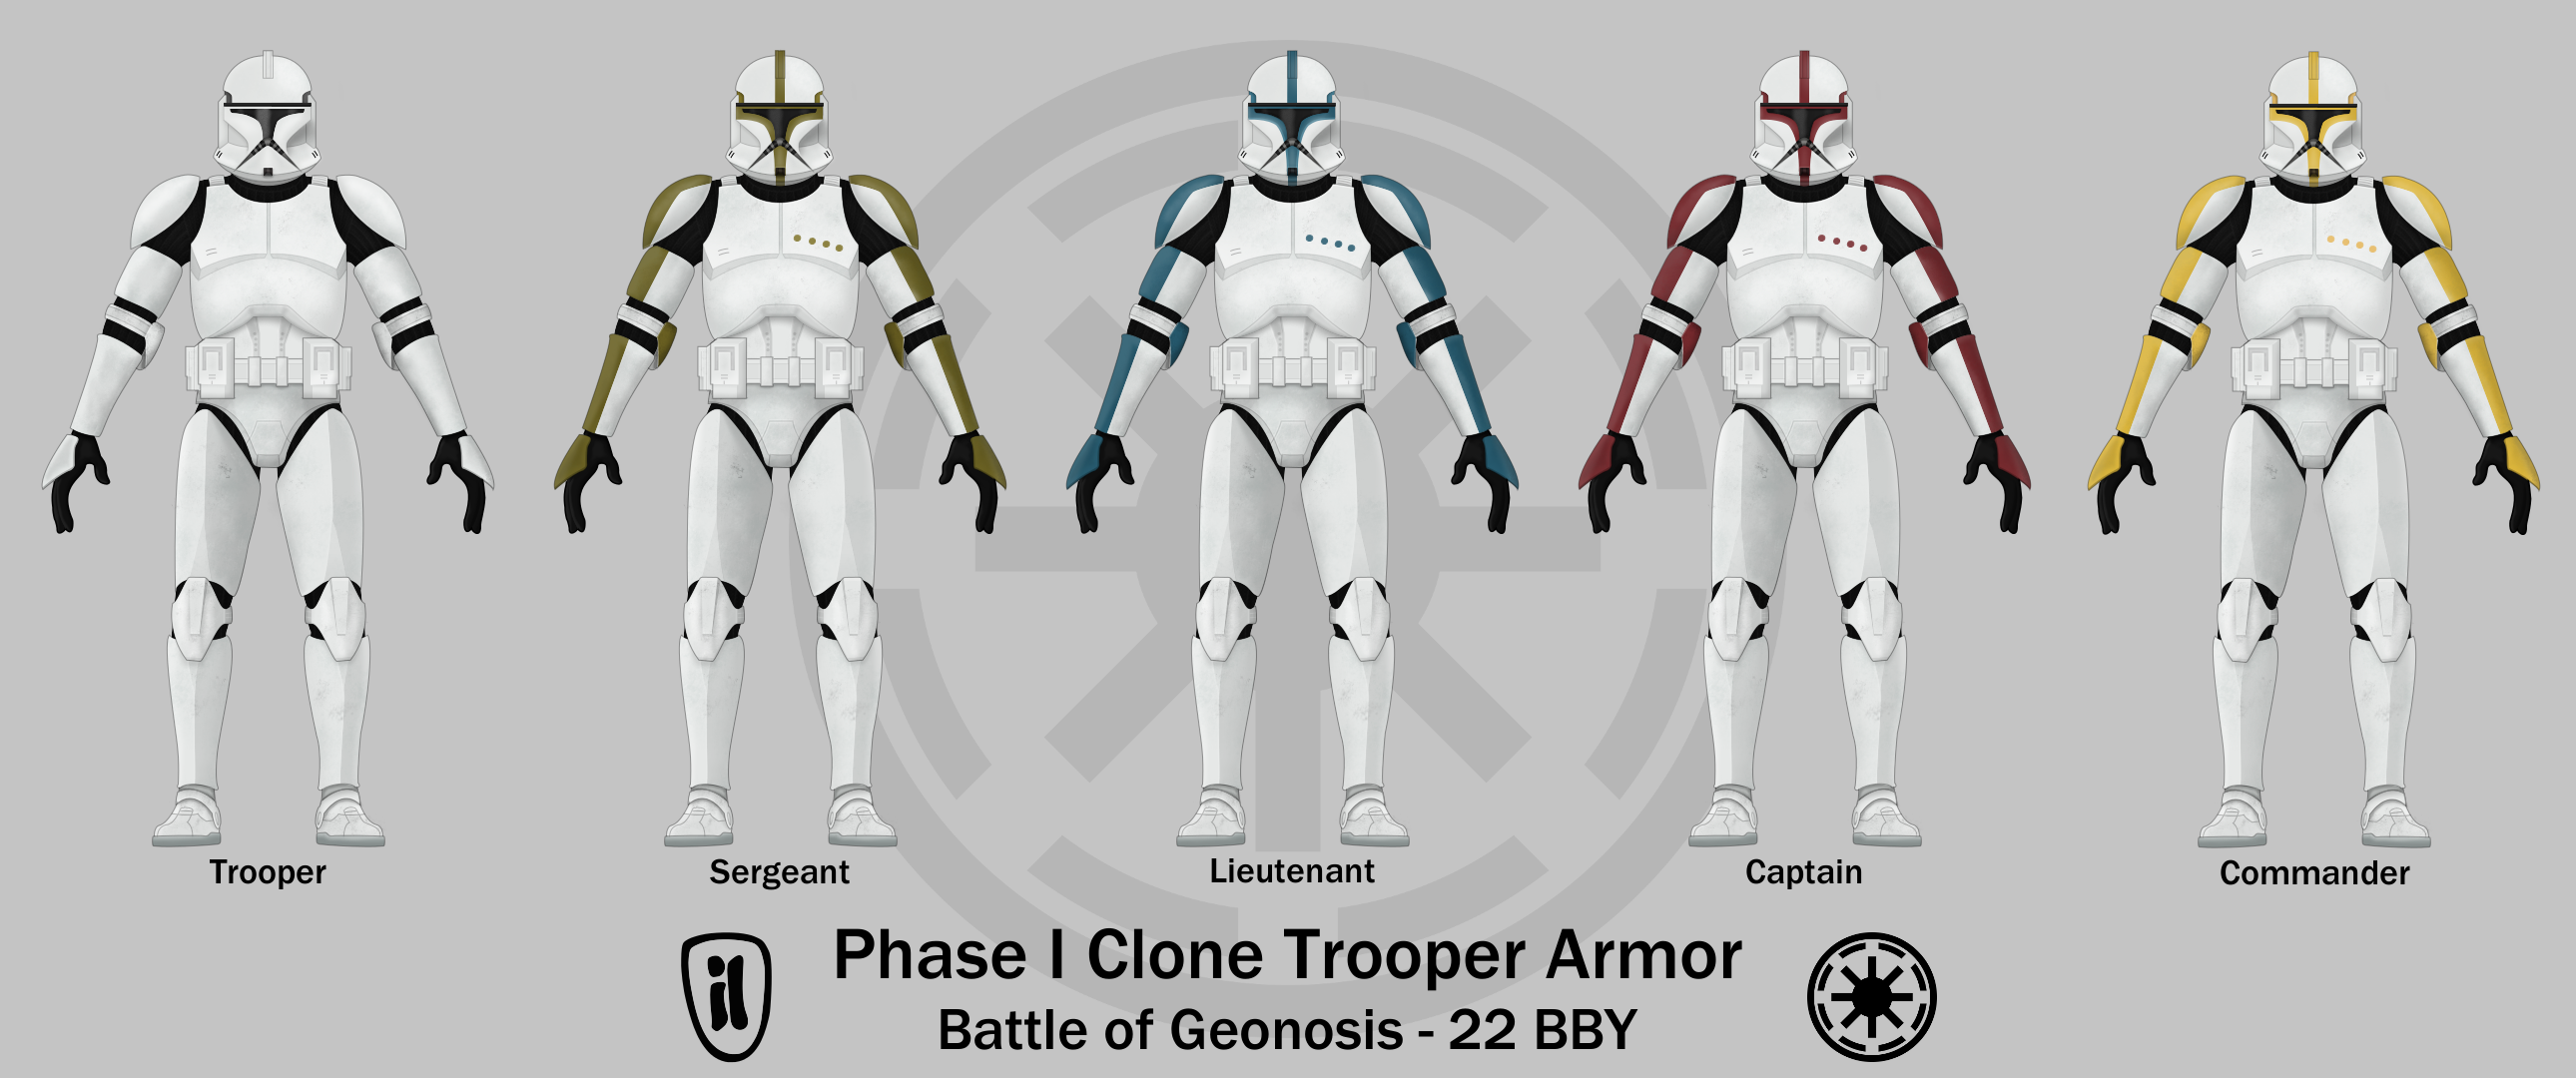 Phase I Clone Trooper Armor